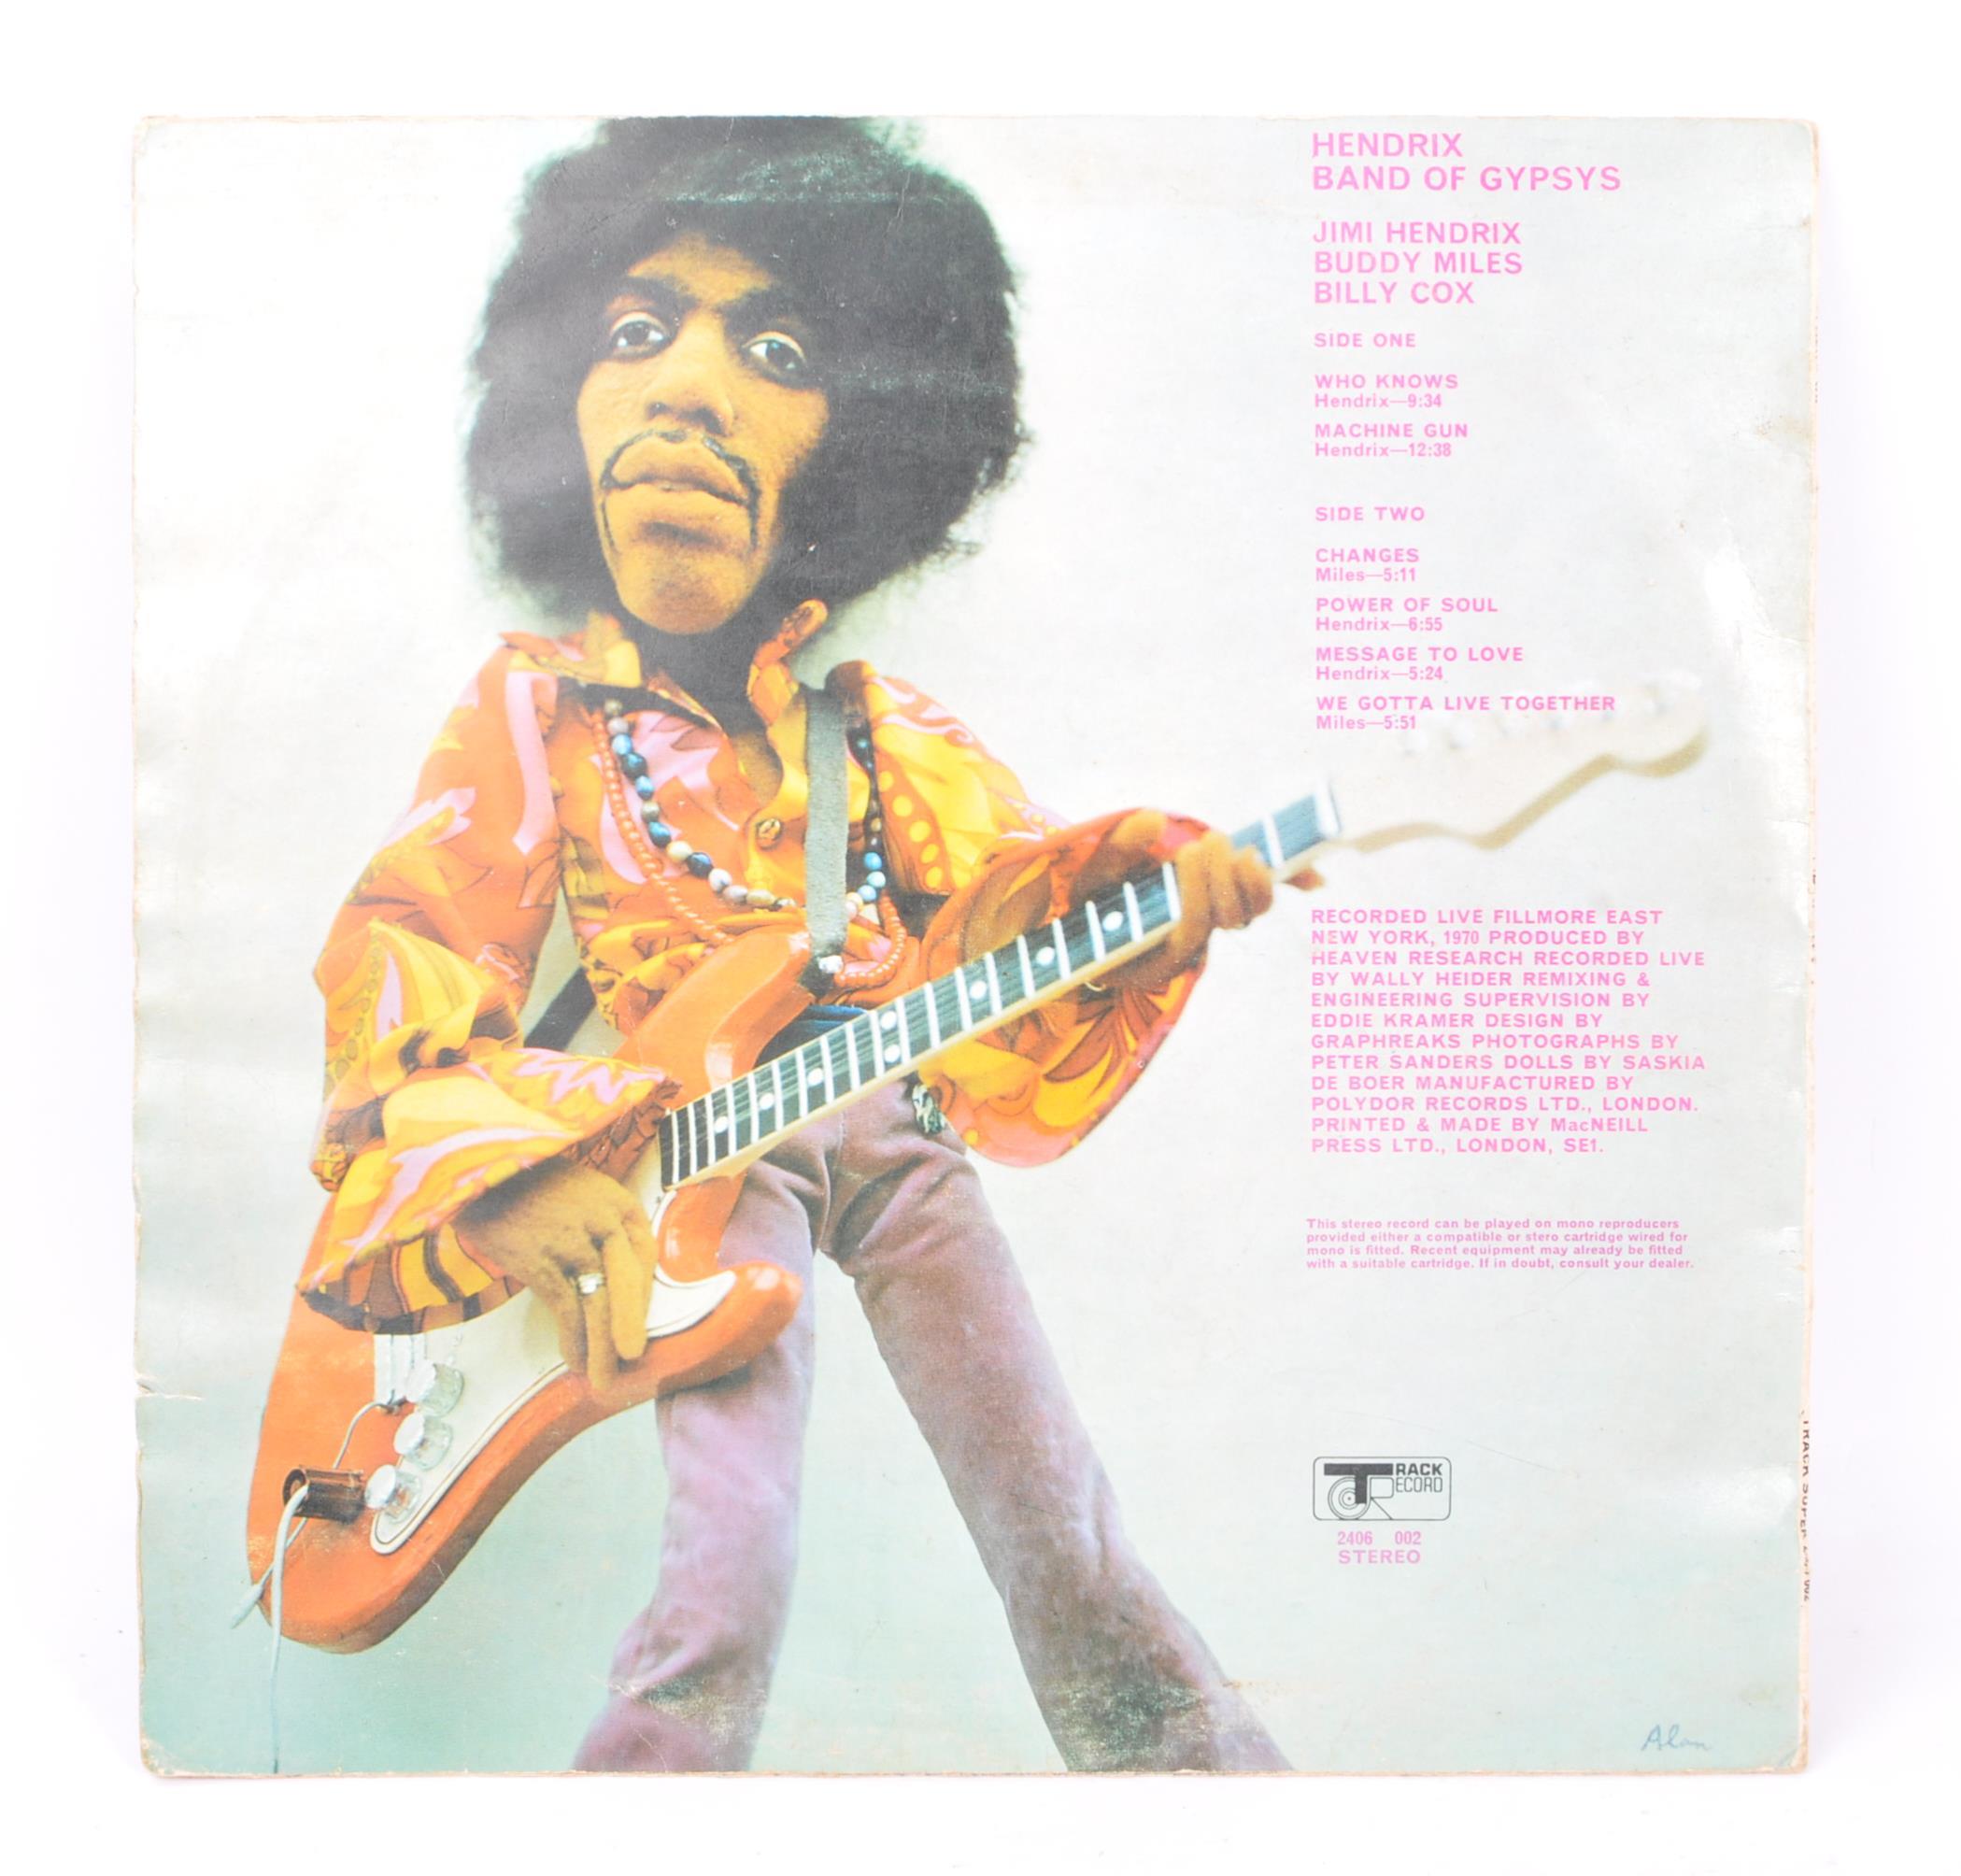 JIMI HENDRIX - BAND OF GYPSYS LP - 1970S VINYL RECORD ALBUM - Image 2 of 2